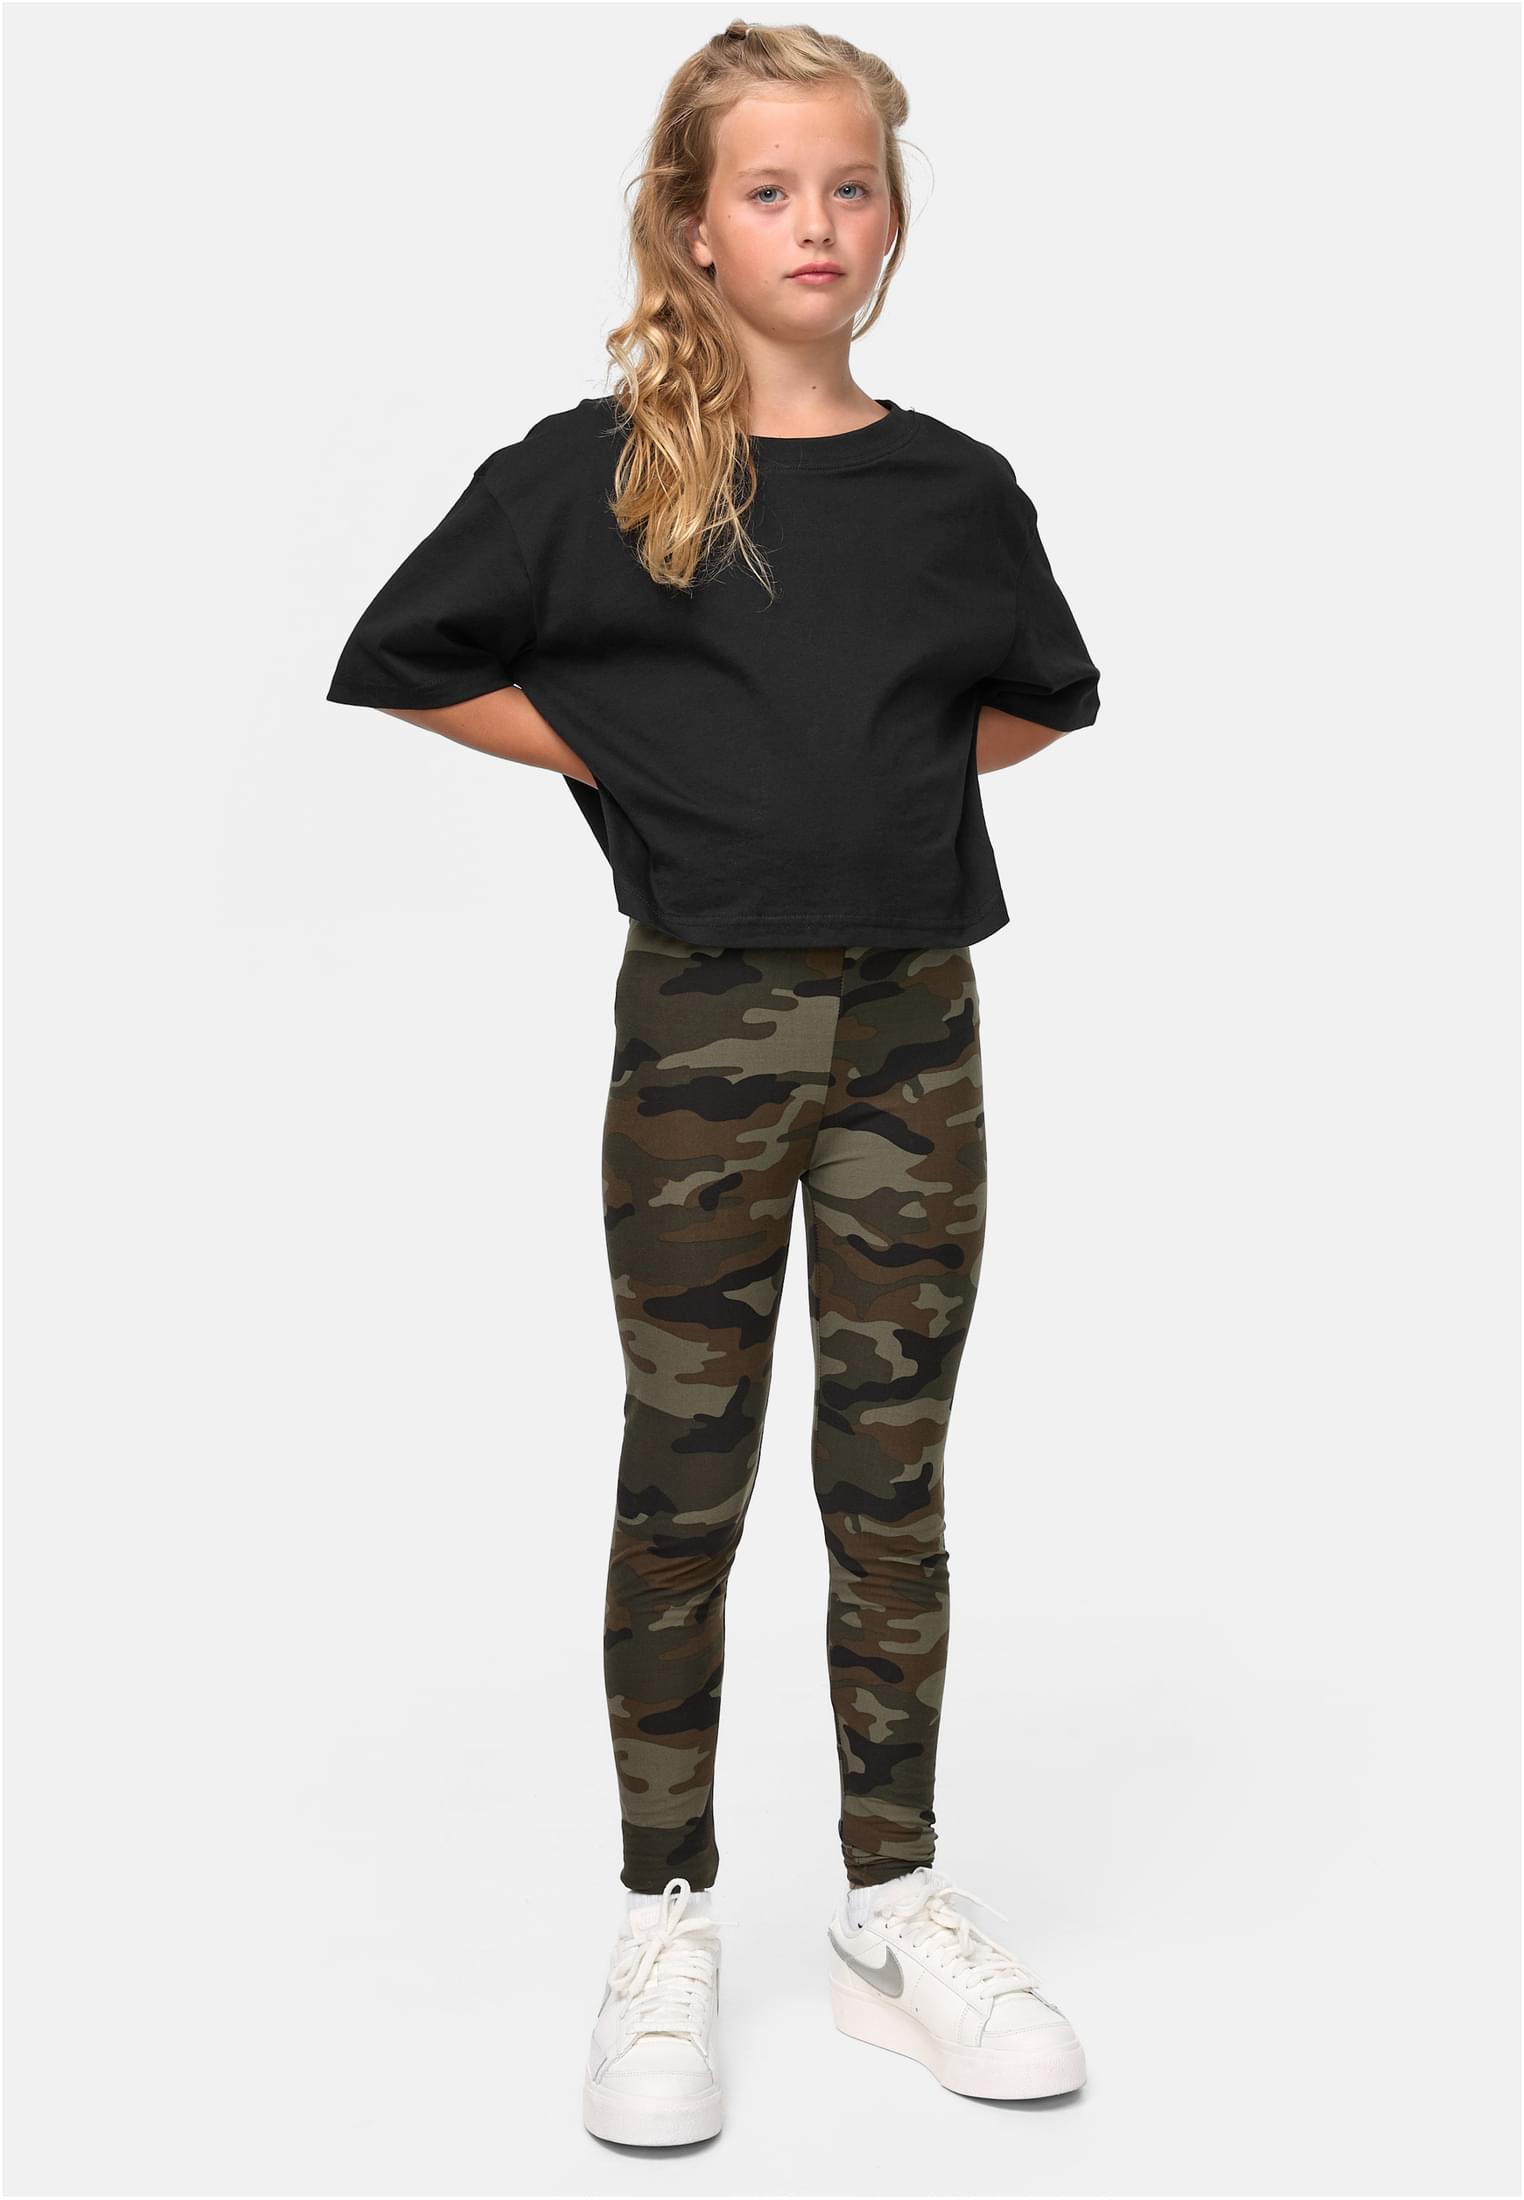 Kids Girls Leggings Camouflage Print Fashion - A2Z Camo Leggings Charcoal 13